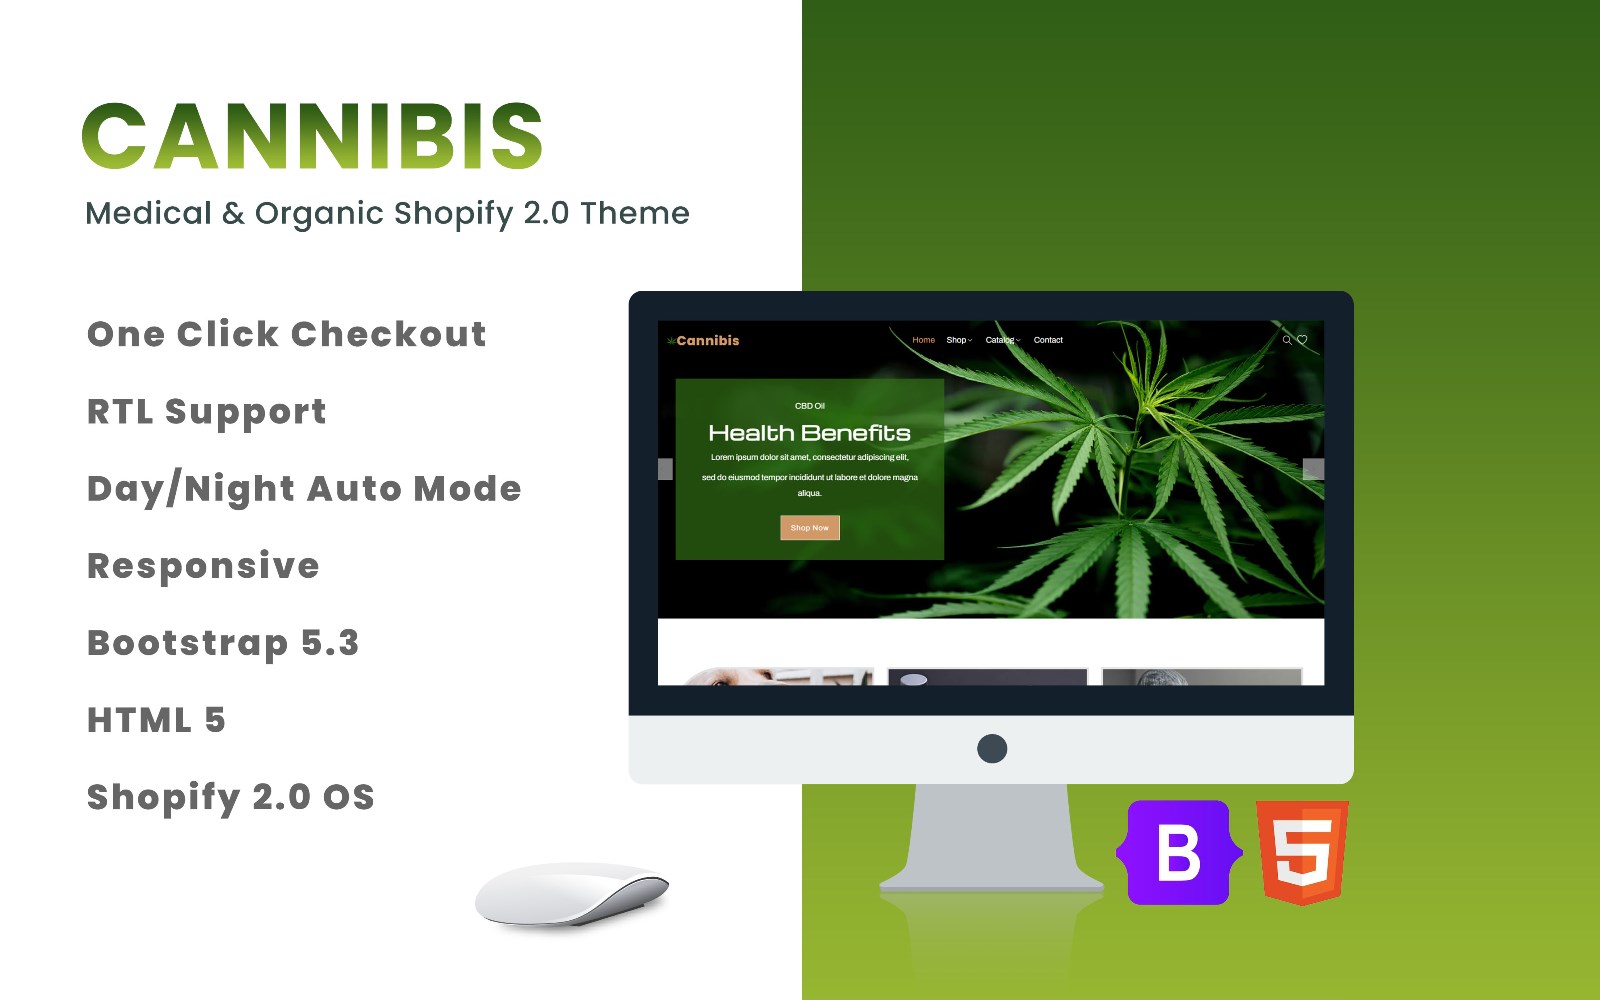 Cannibis - Medical, CBD, Cannabis & Organic Shopify 2.0 Theme